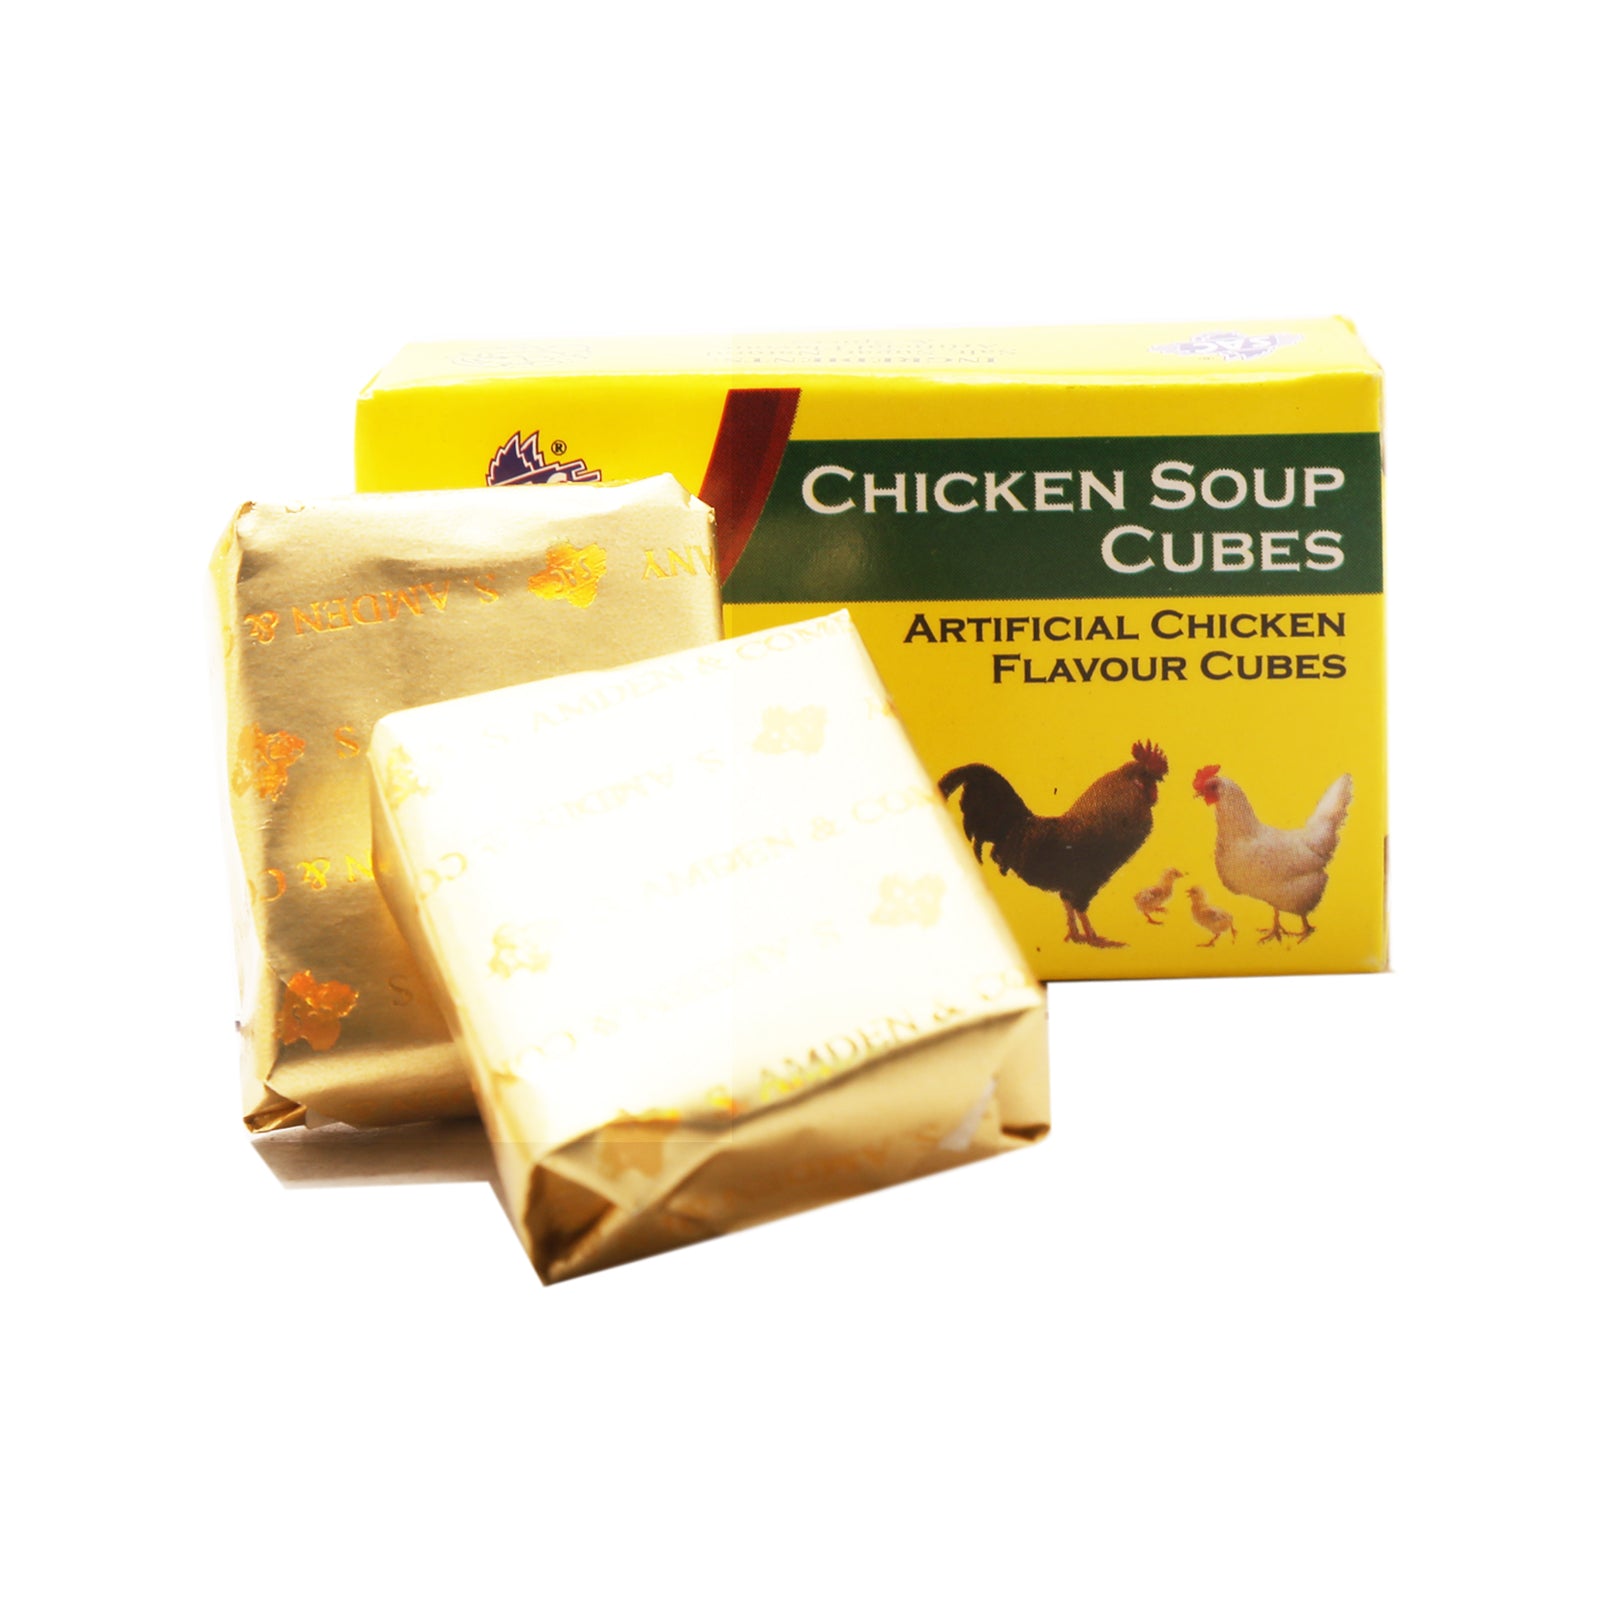 Chicken Cubes - Chicken Stock (2 Cubes Inside)